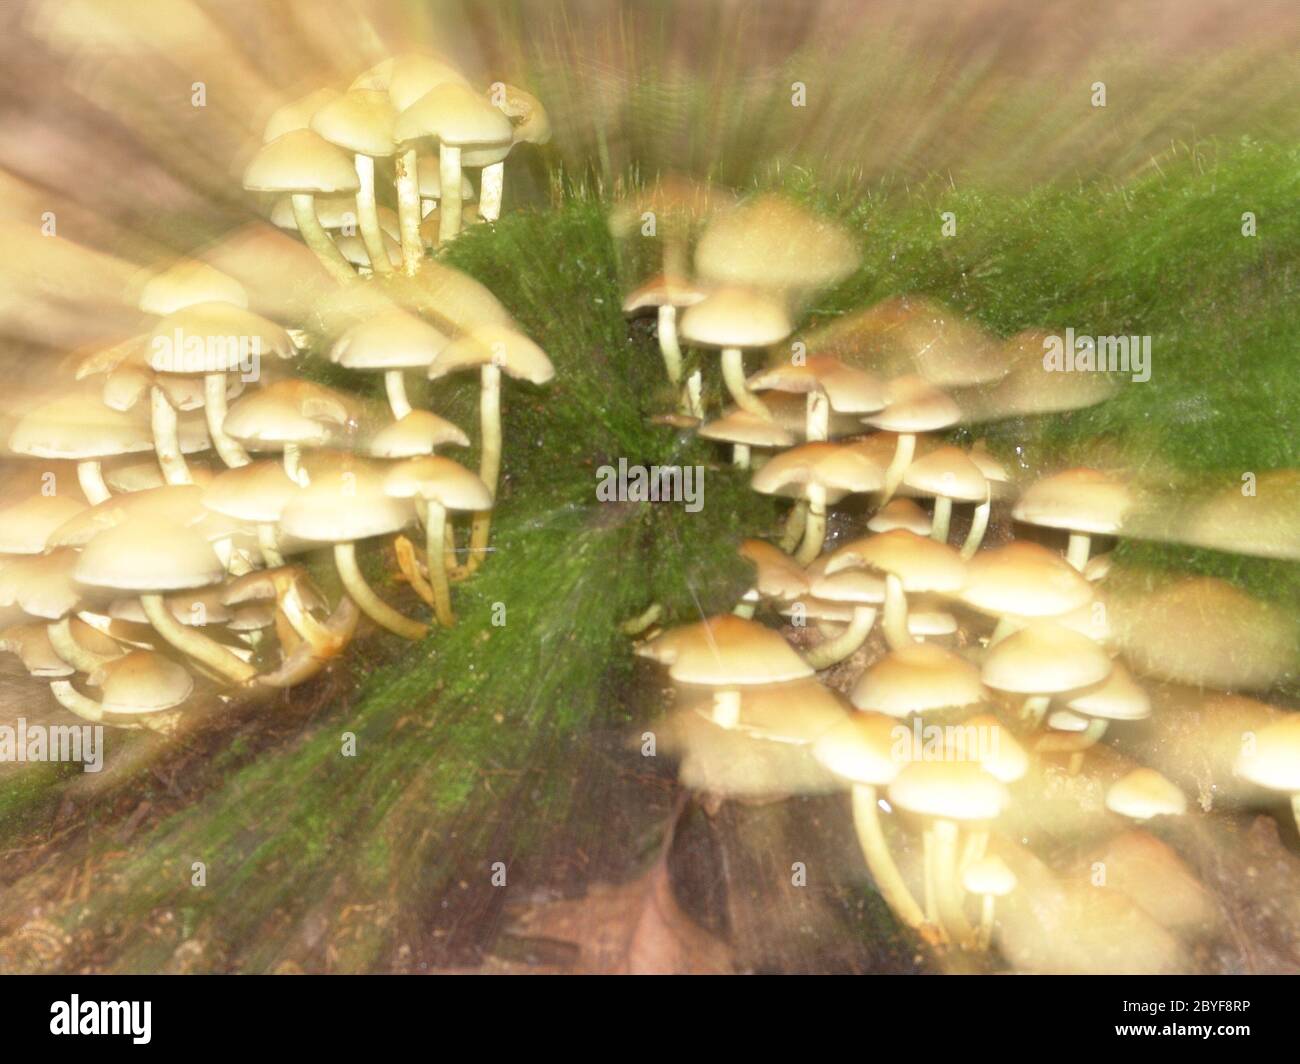 Intoxicating mushrooms Stock Photo